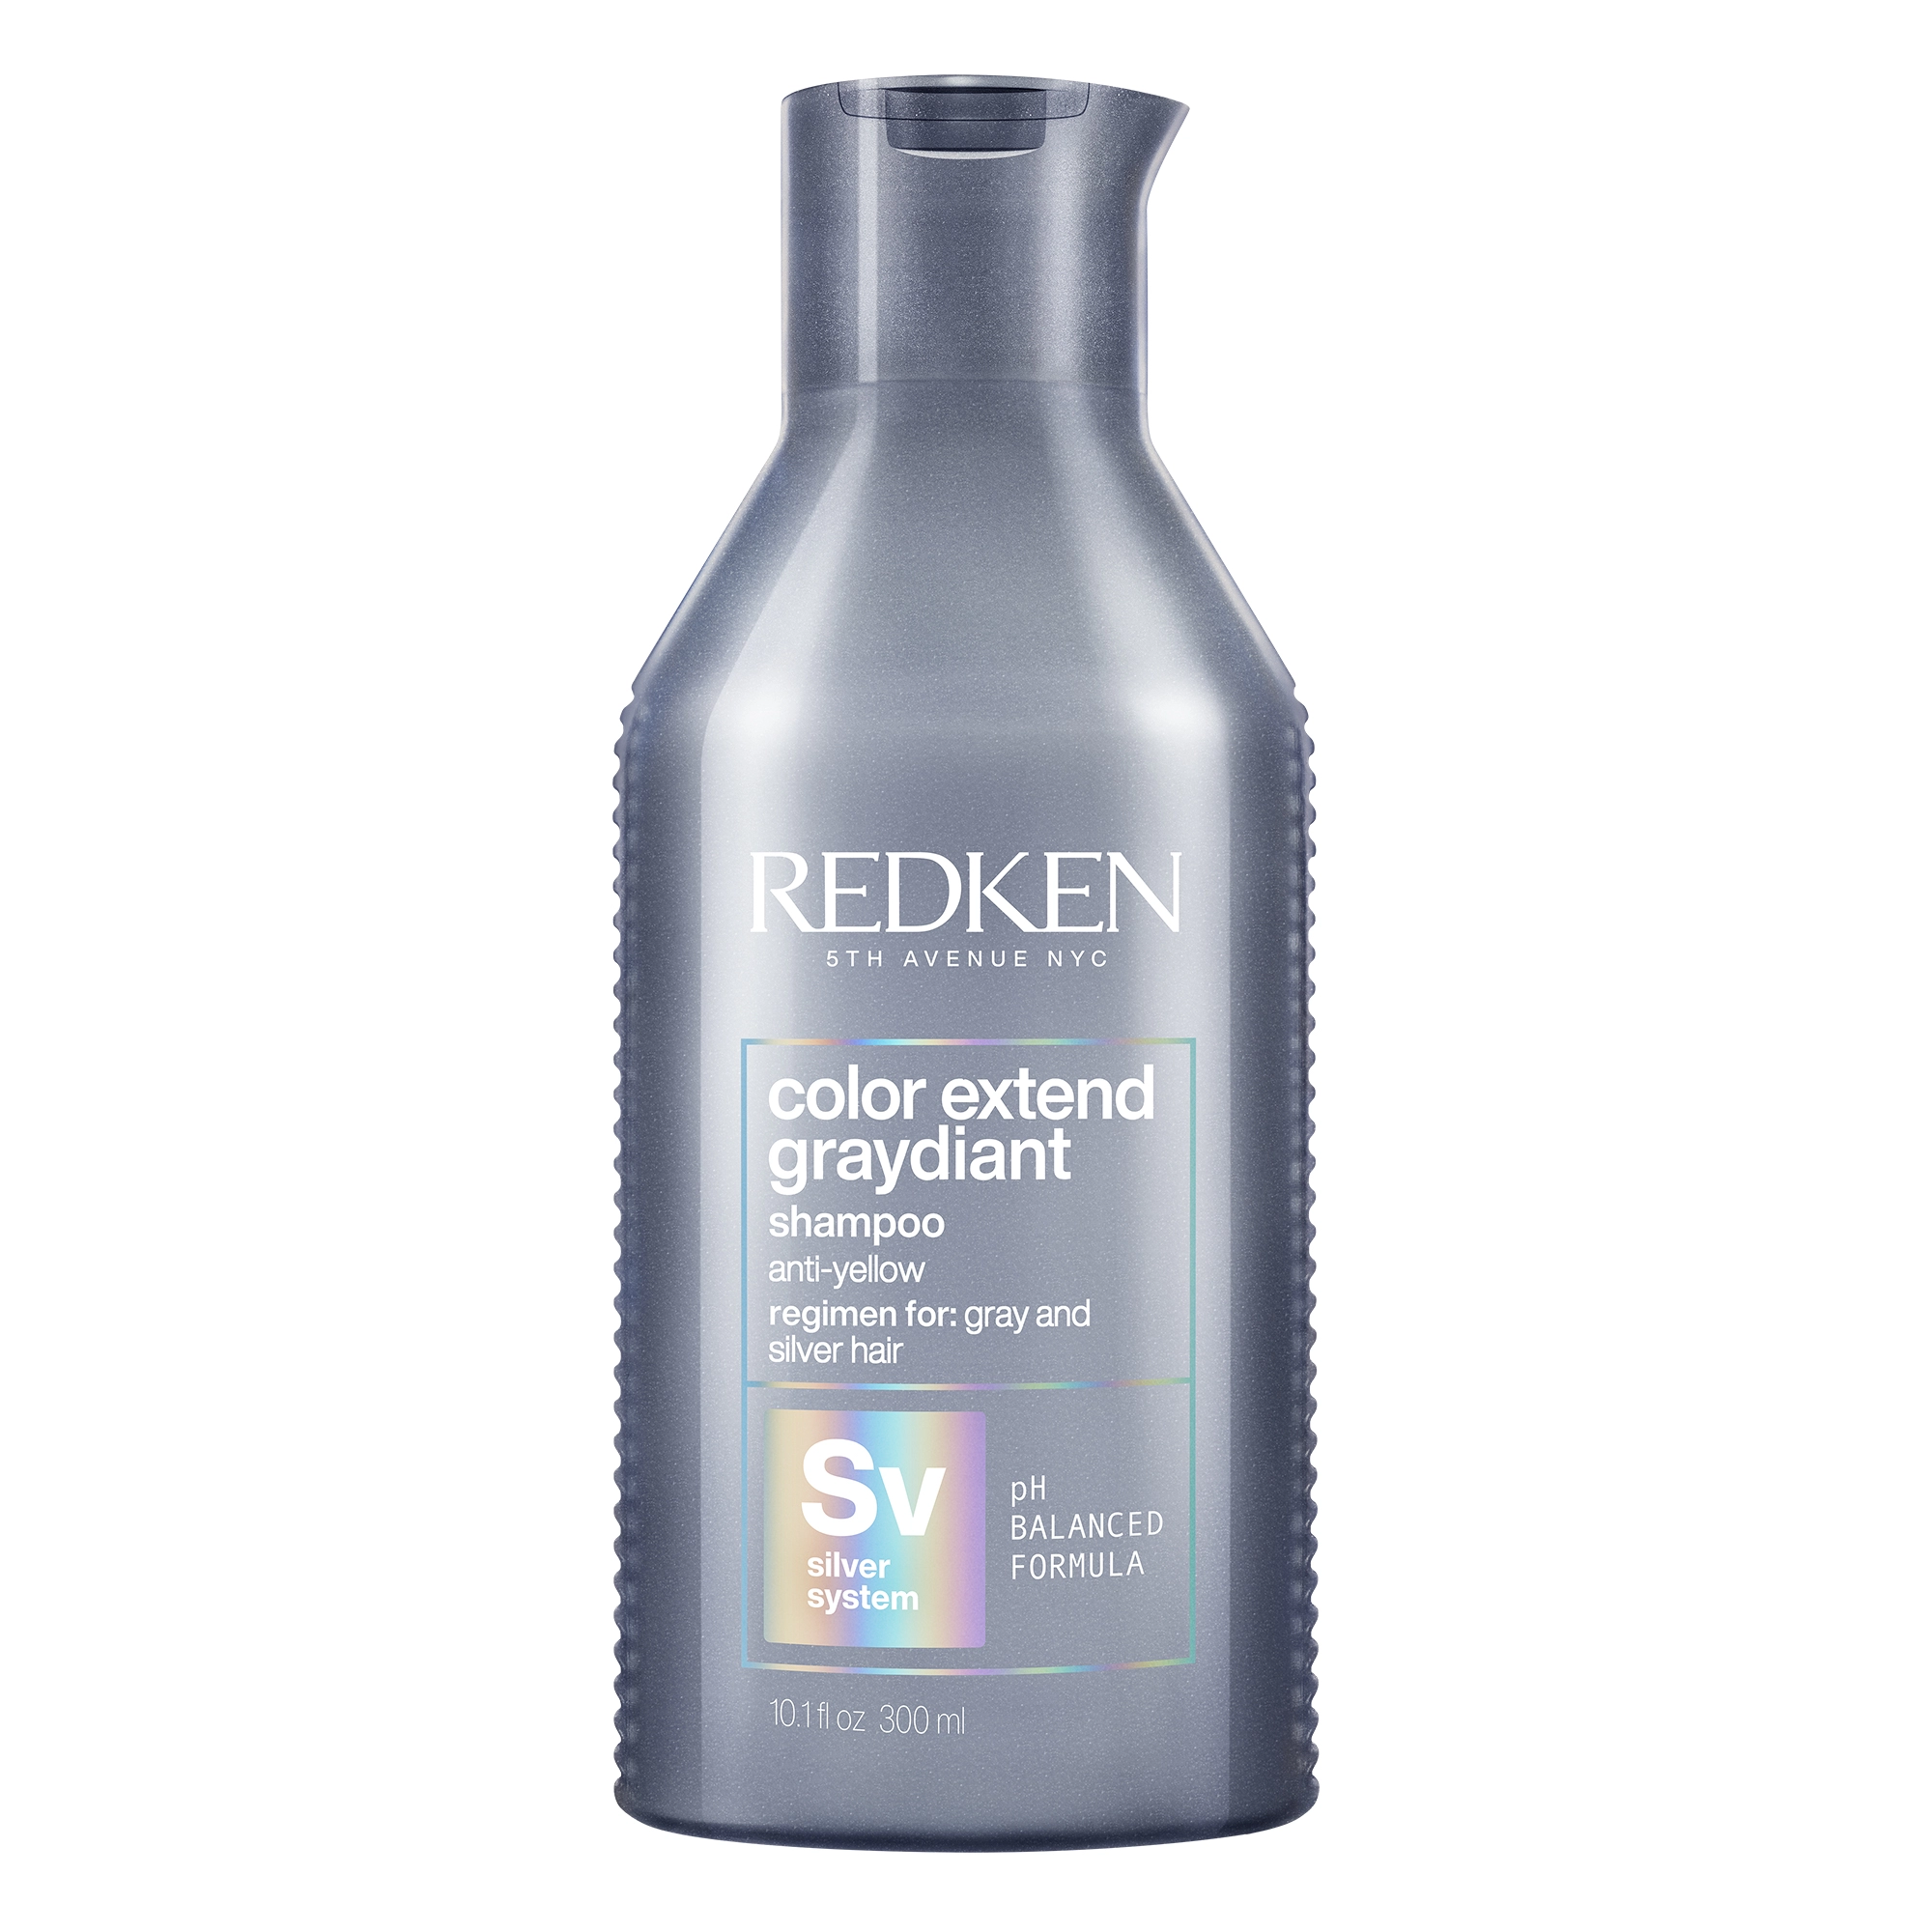 Redken-2020-Color-Extend-Graydiant-Shampoo-Product-Shot-2000×2000